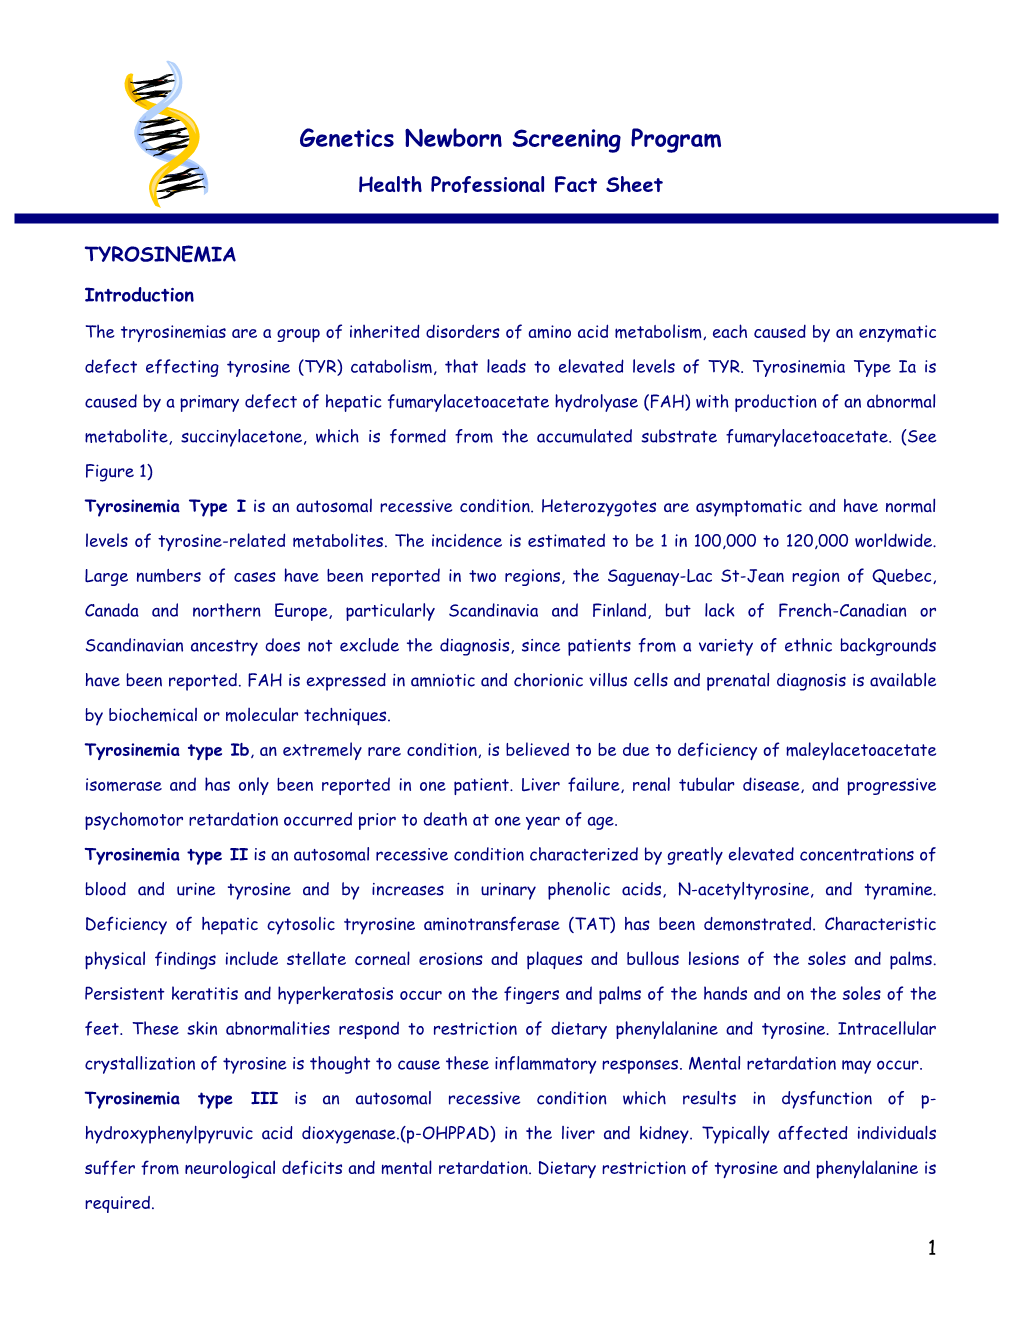 Health Professional Fact Sheet